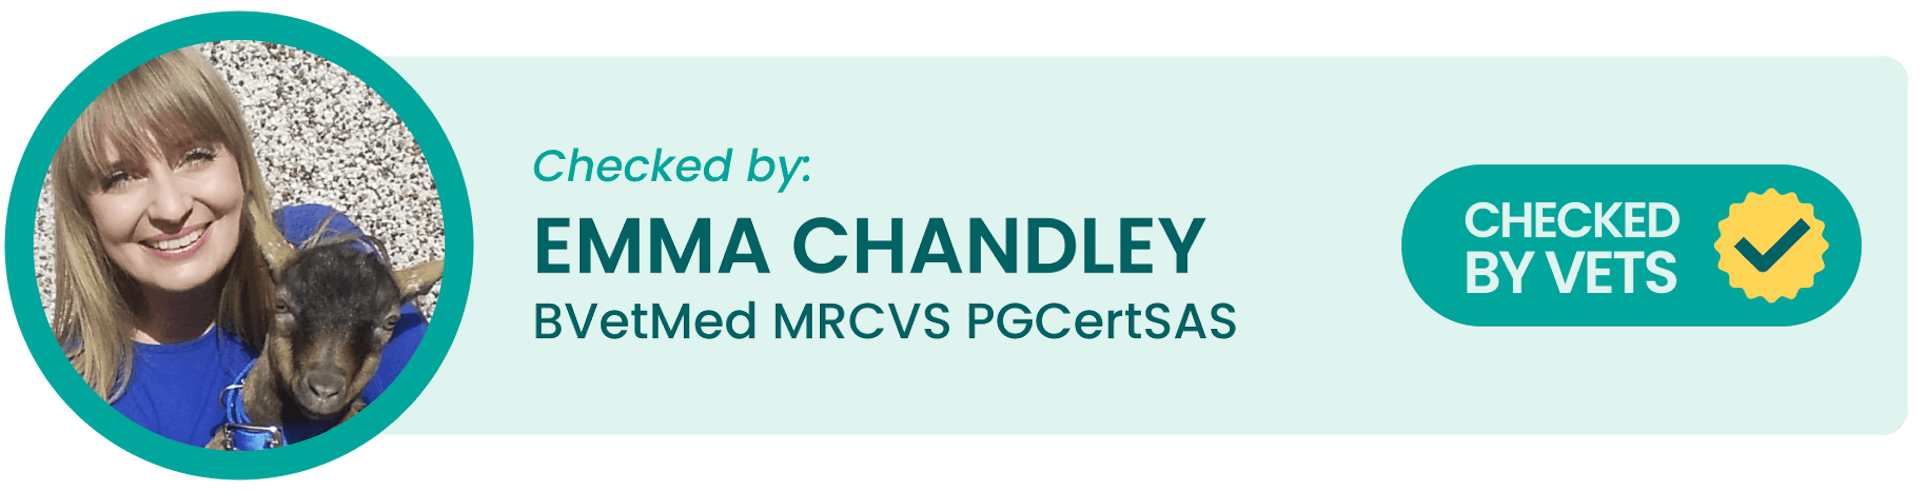 Checked by: Emma Chandley BVetMed MRCVS PGCertSAS